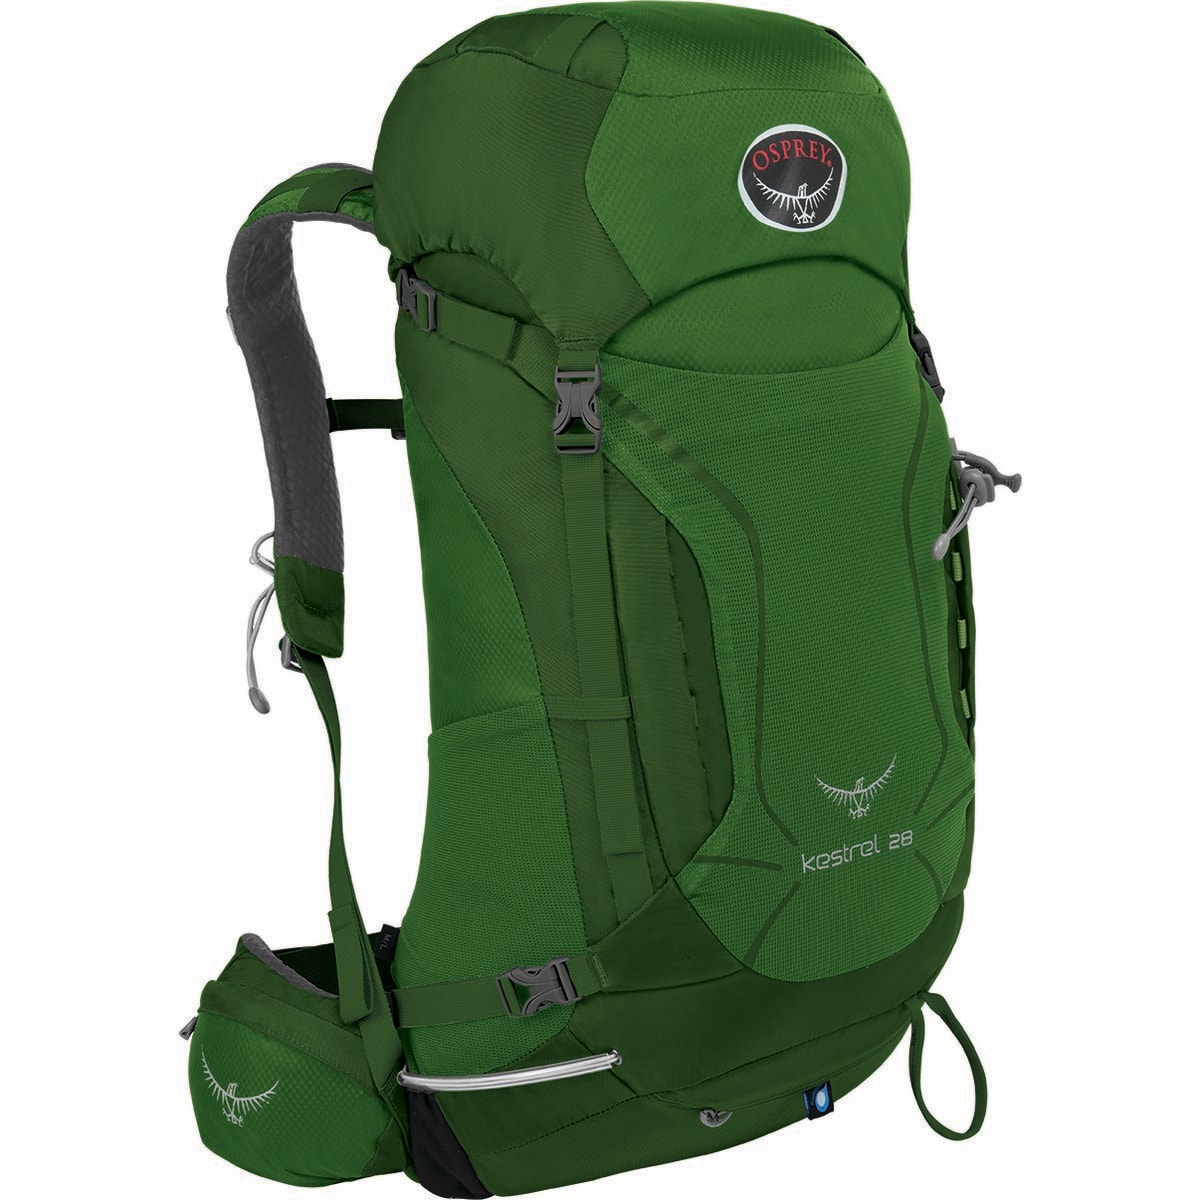 Osprey Packs Kestrel 28 Backpack - 1587-1709cu in Jungle 